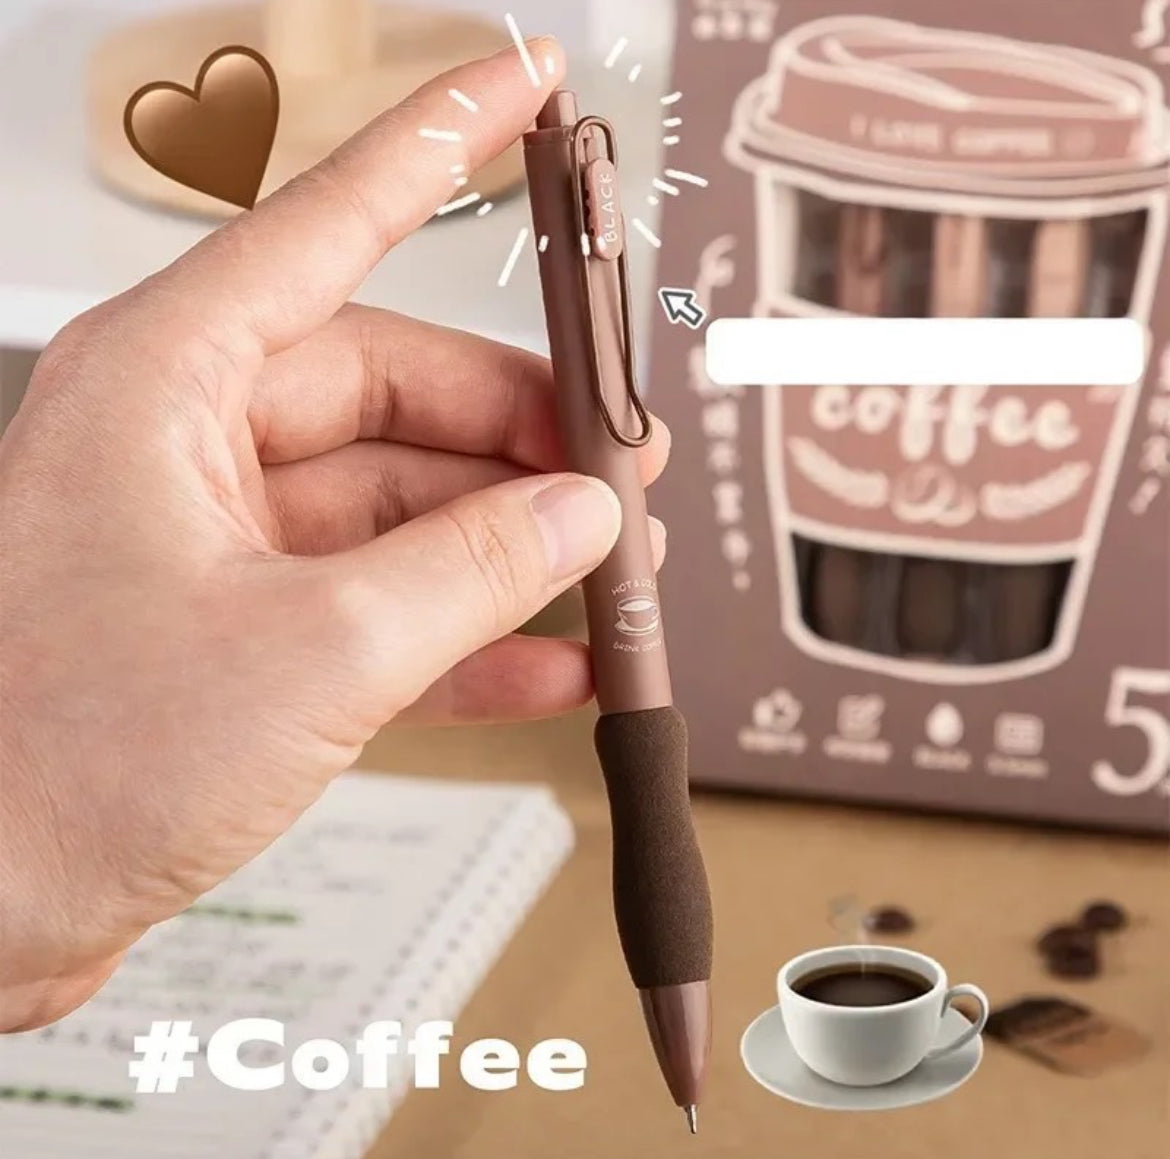 Kawaii Premium Coffee Pen Set of 5 With Soft Grip